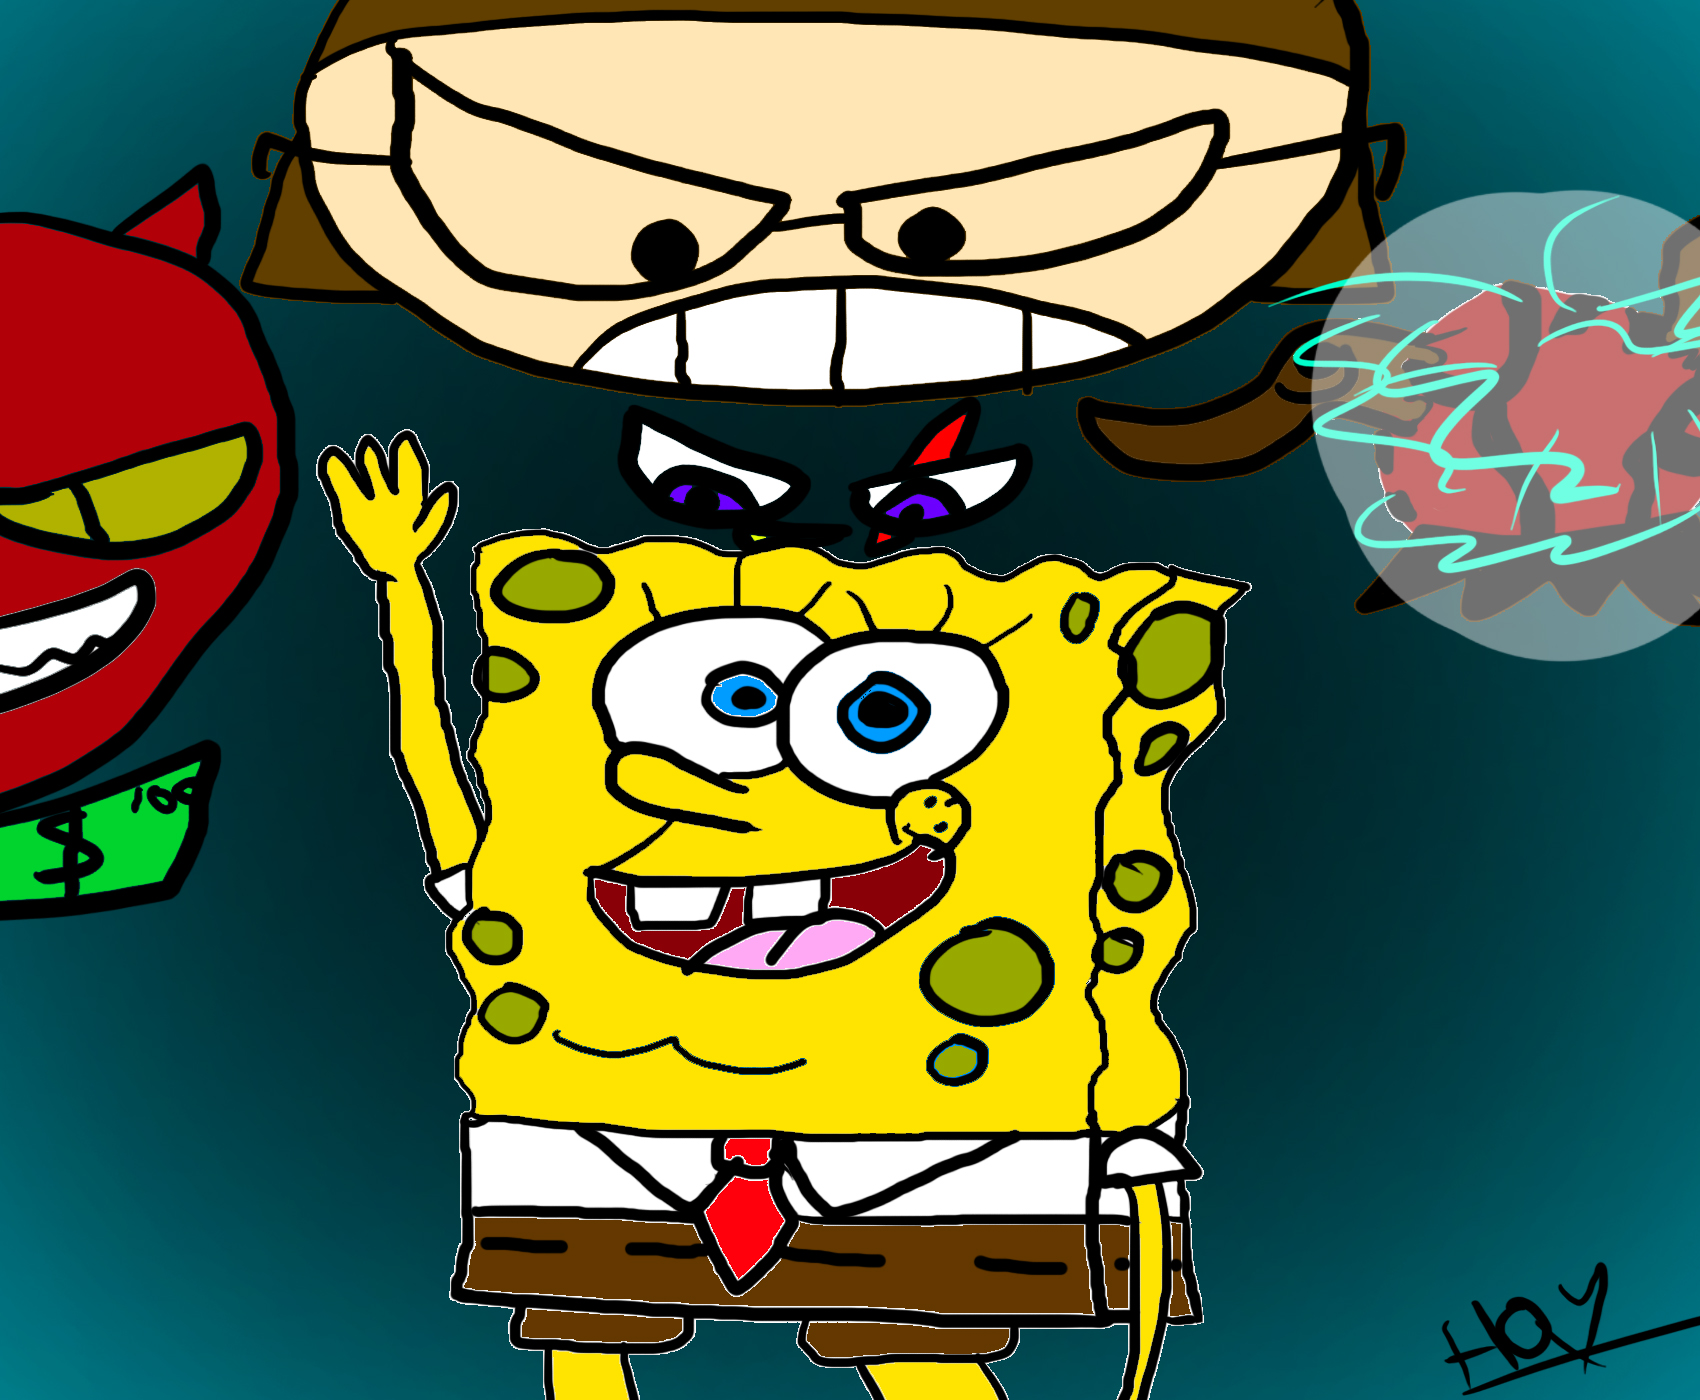  Drawn To Life: Spongebob Squarepants (Renewed) : Video Games